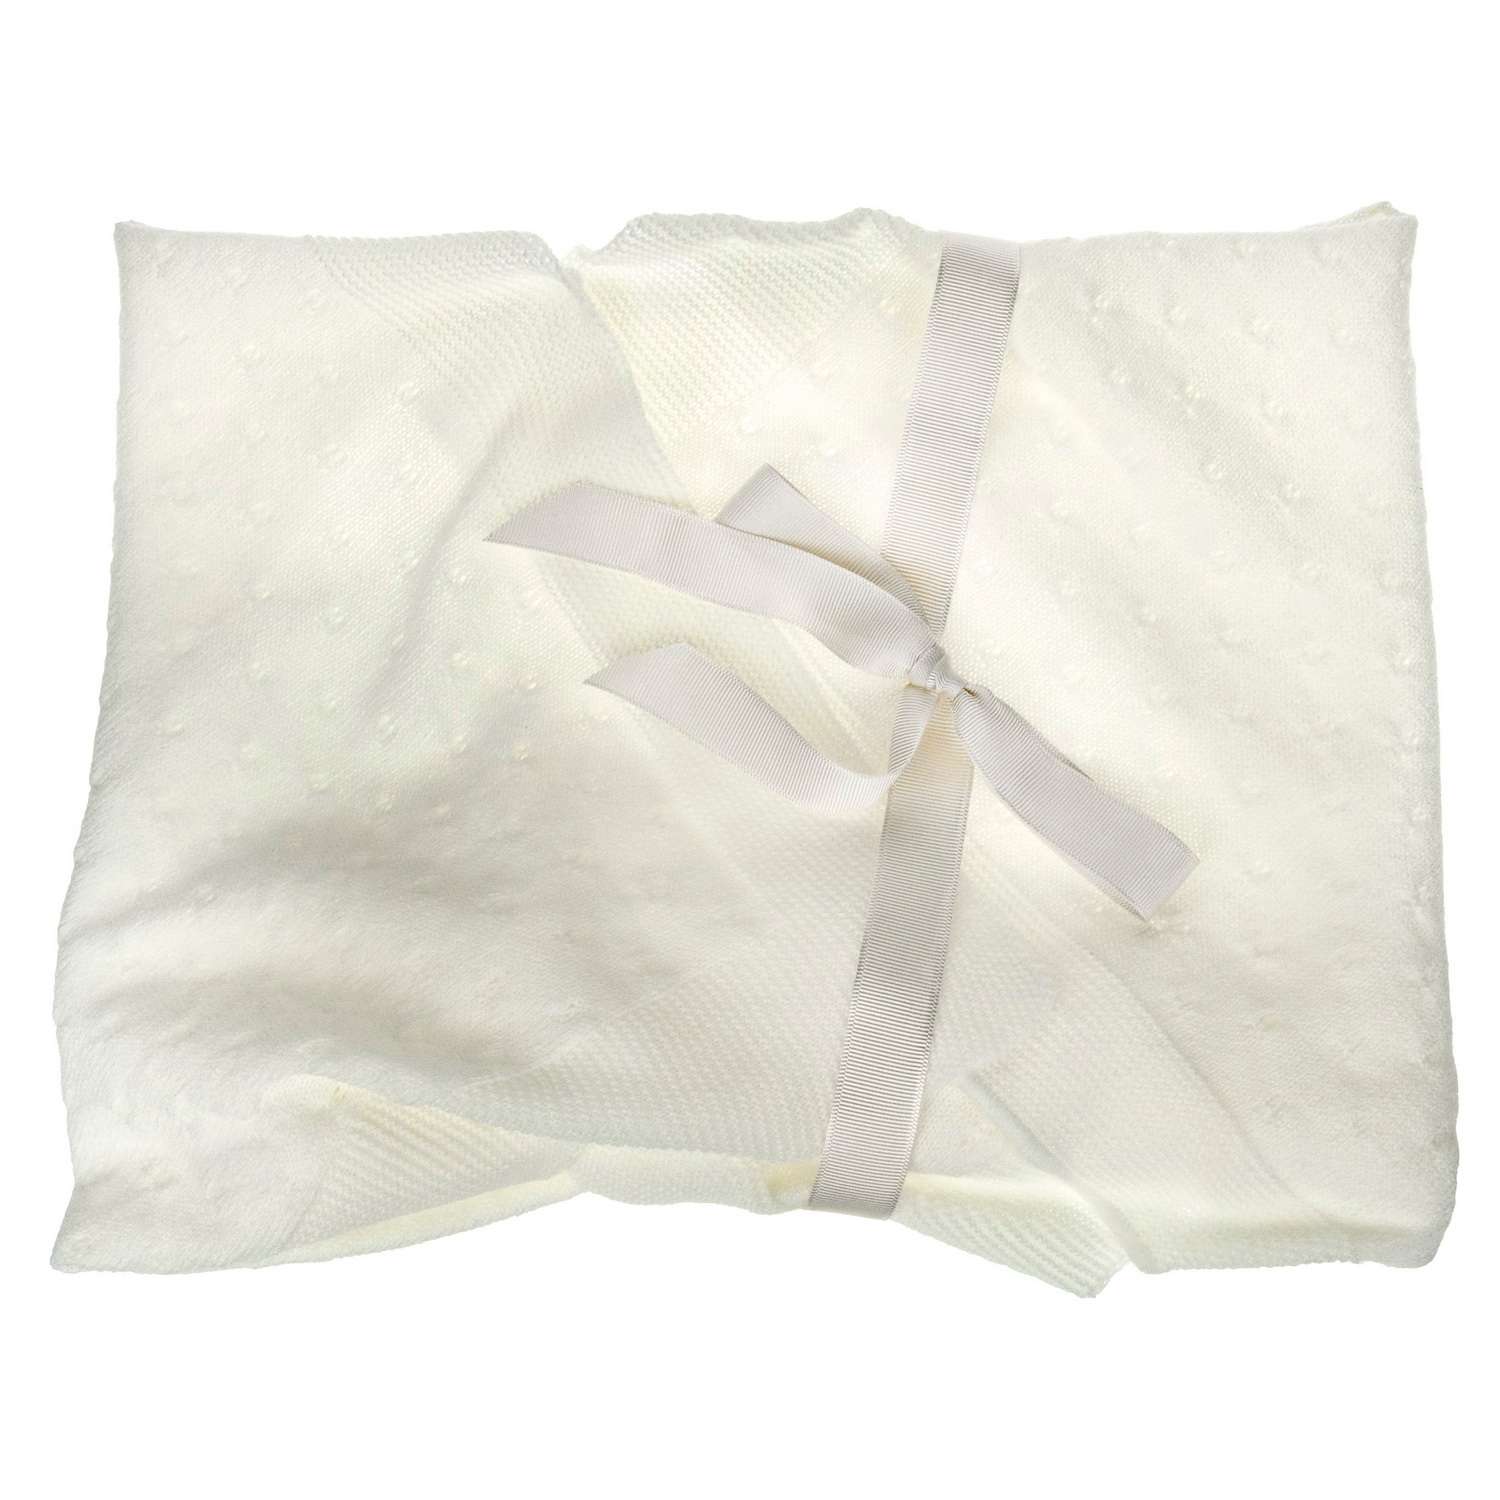 одеяло-конверт Arias для куклы белый54х68 см. кор. Т19753 - фото 1